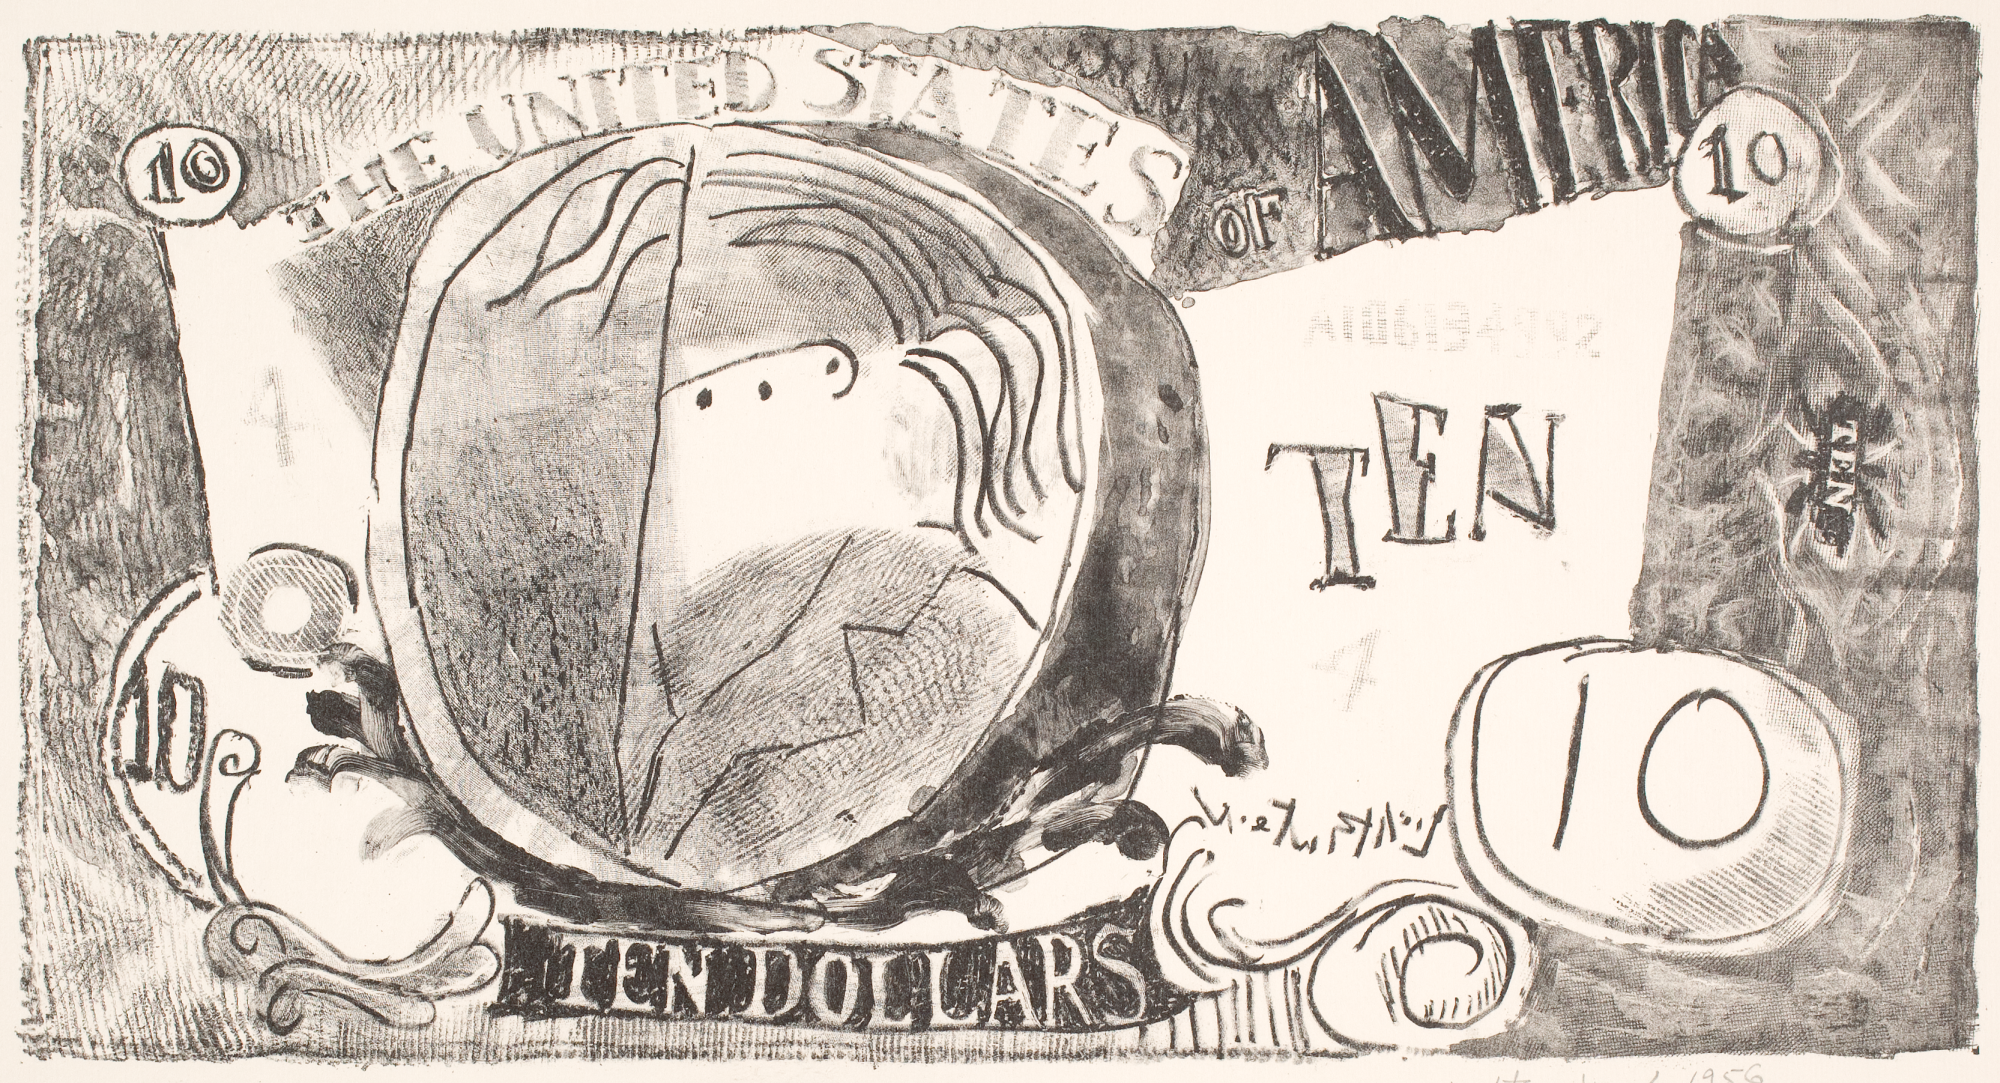 Roy Lichtenstein, Ten Dollar Bill (Ten Dollars), 1956. Lithograph on wove paper, edition 4/25; 16 7/8 x 22 5/8 inches (42.9 x 57.5 cm). Collection of the Whitney Museum of American Art, New York. The Roy Lichtenstein Study Collection; gift of the Roy Lichtenstein Foundation, 2019.92. Estate of Roy Lichtenstein.